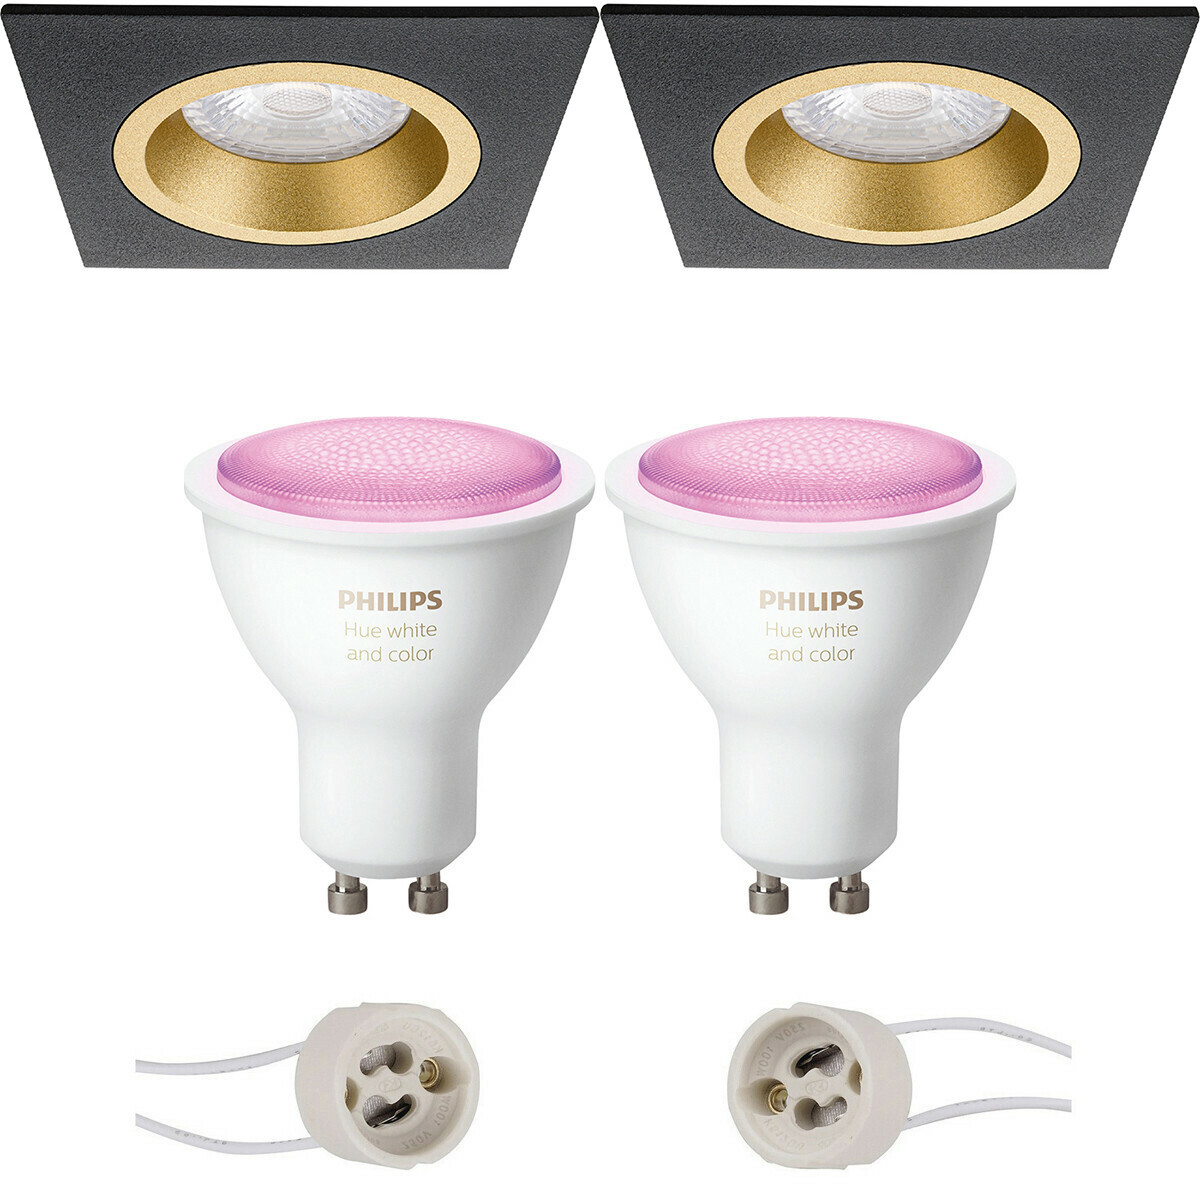 Pragmi Rodos Pro - Inbouw Vierkant - Mat Zwart/Goud - 93mm - Philips Hue - LED Spot Set GU10 - White and Color Ambiance - Bluetooth